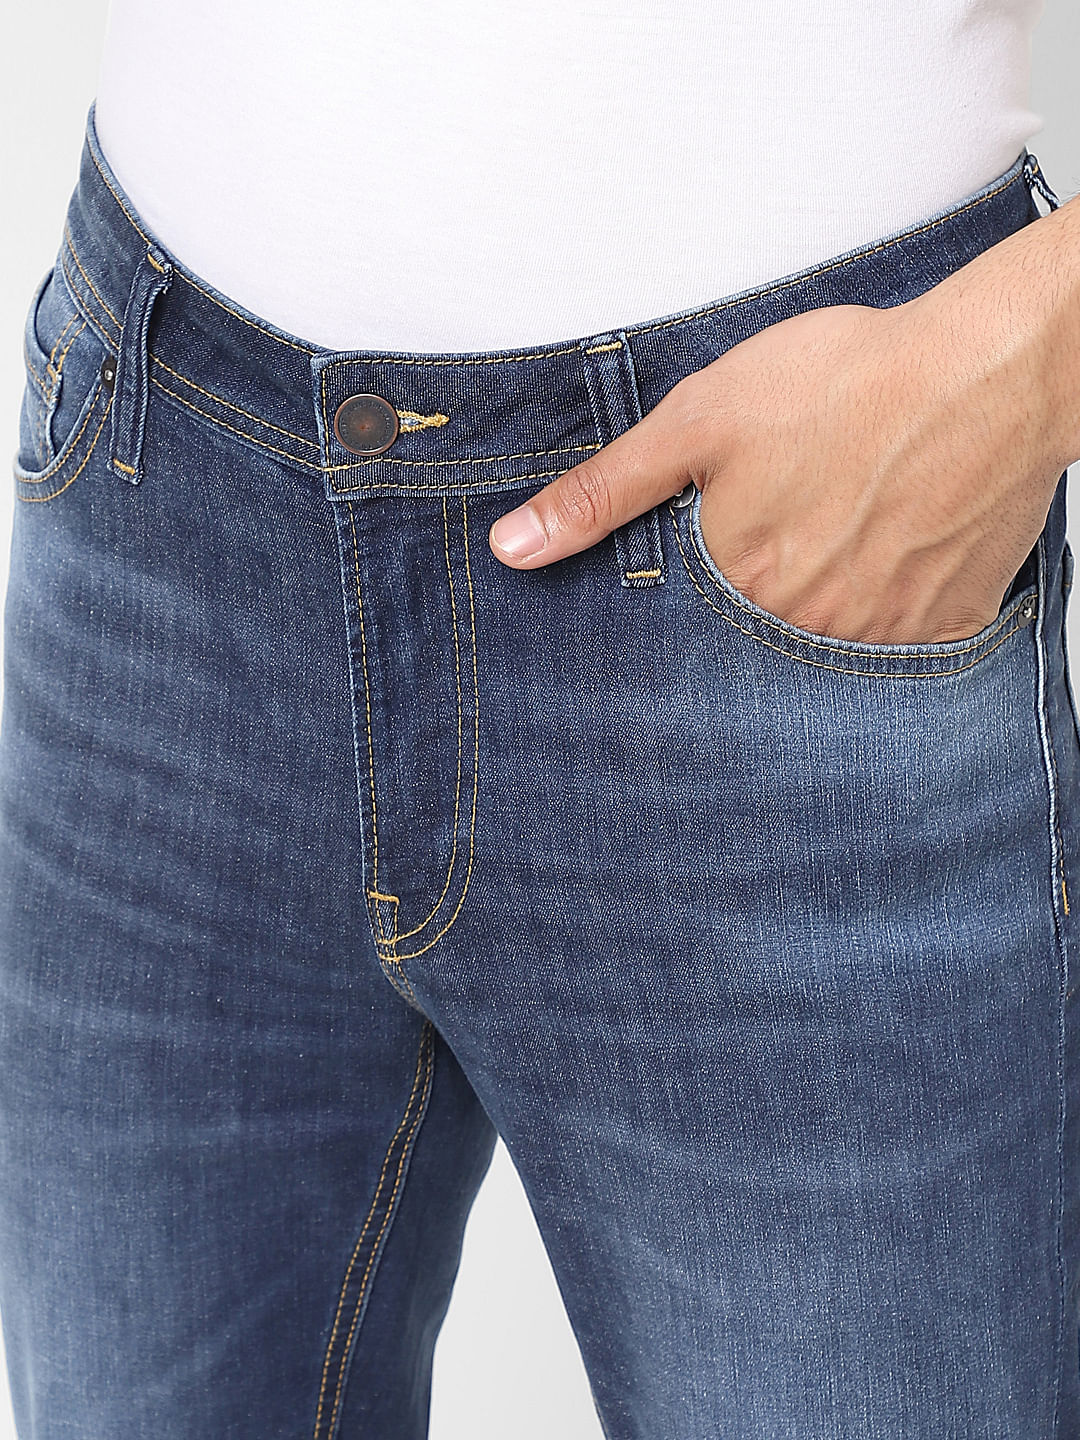 Buy Blue Jeans  Jeggings for Women by LEE COOPER Online  Ajiocom